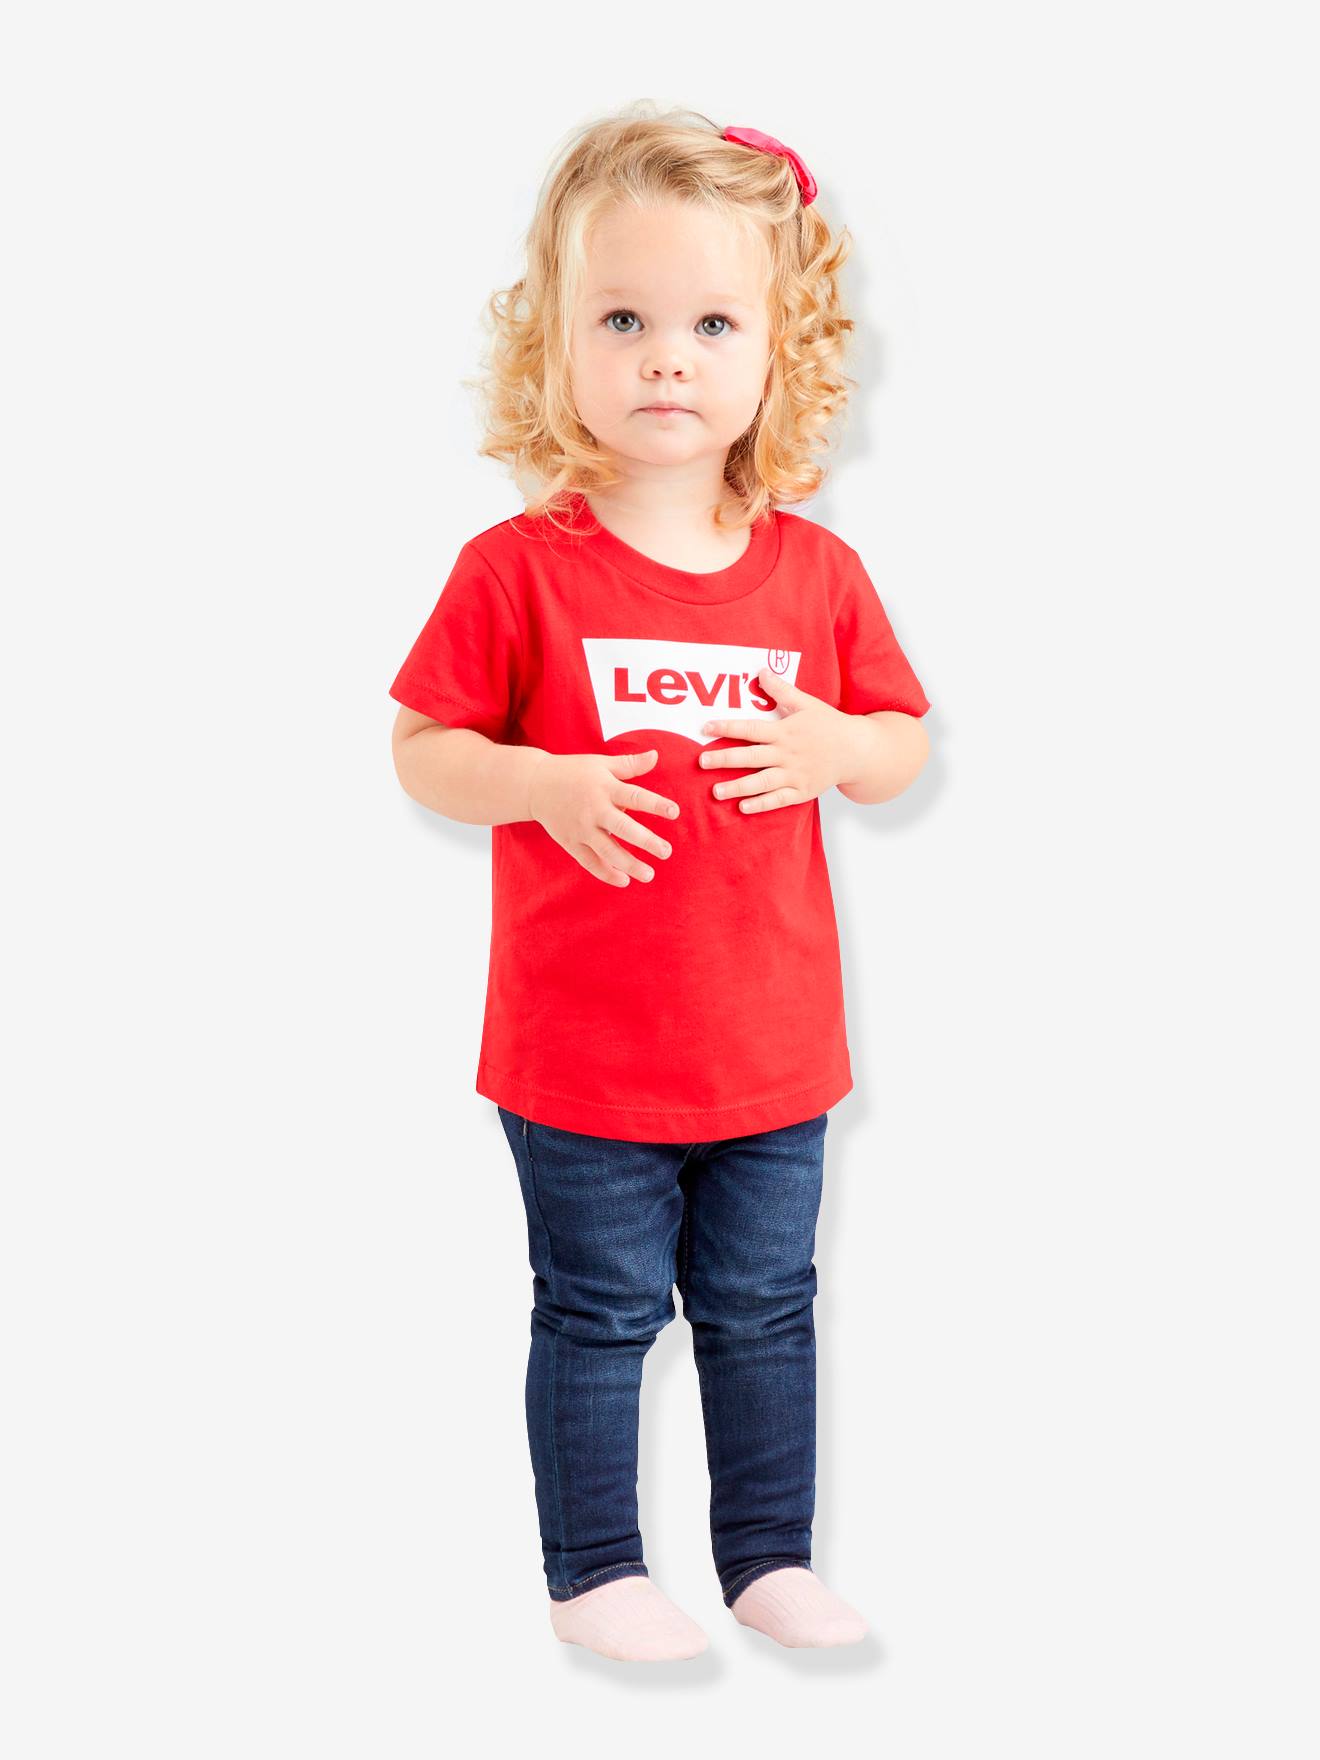 LEVIS KID'S Camiseta Batwing Levi's, bebé rojo